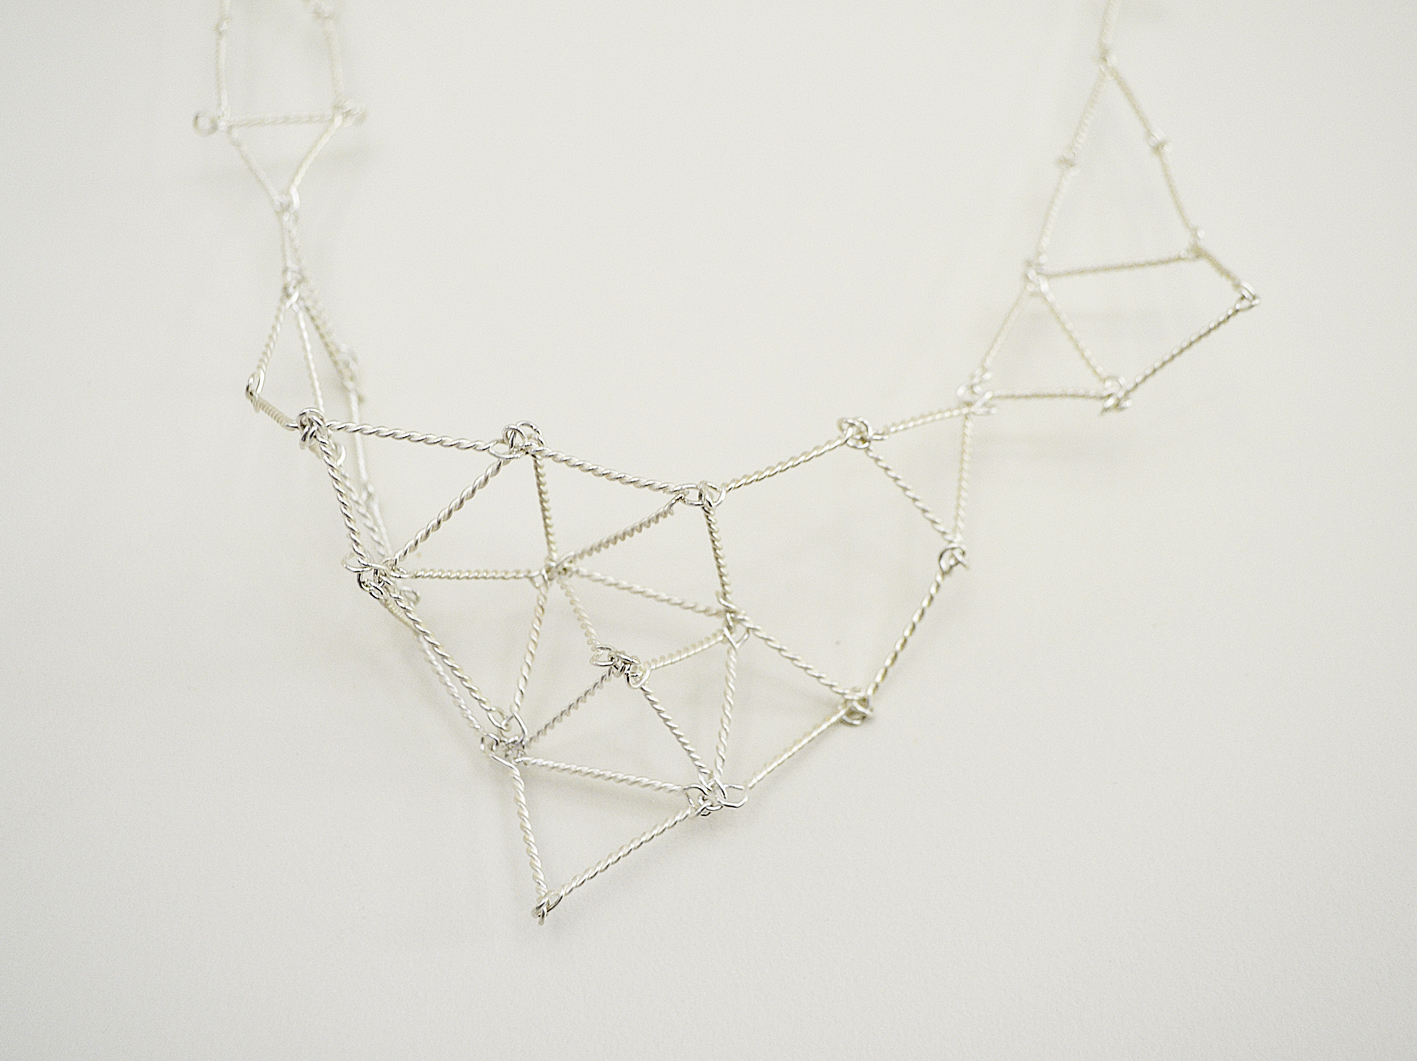 Cosmic Net necklace detail